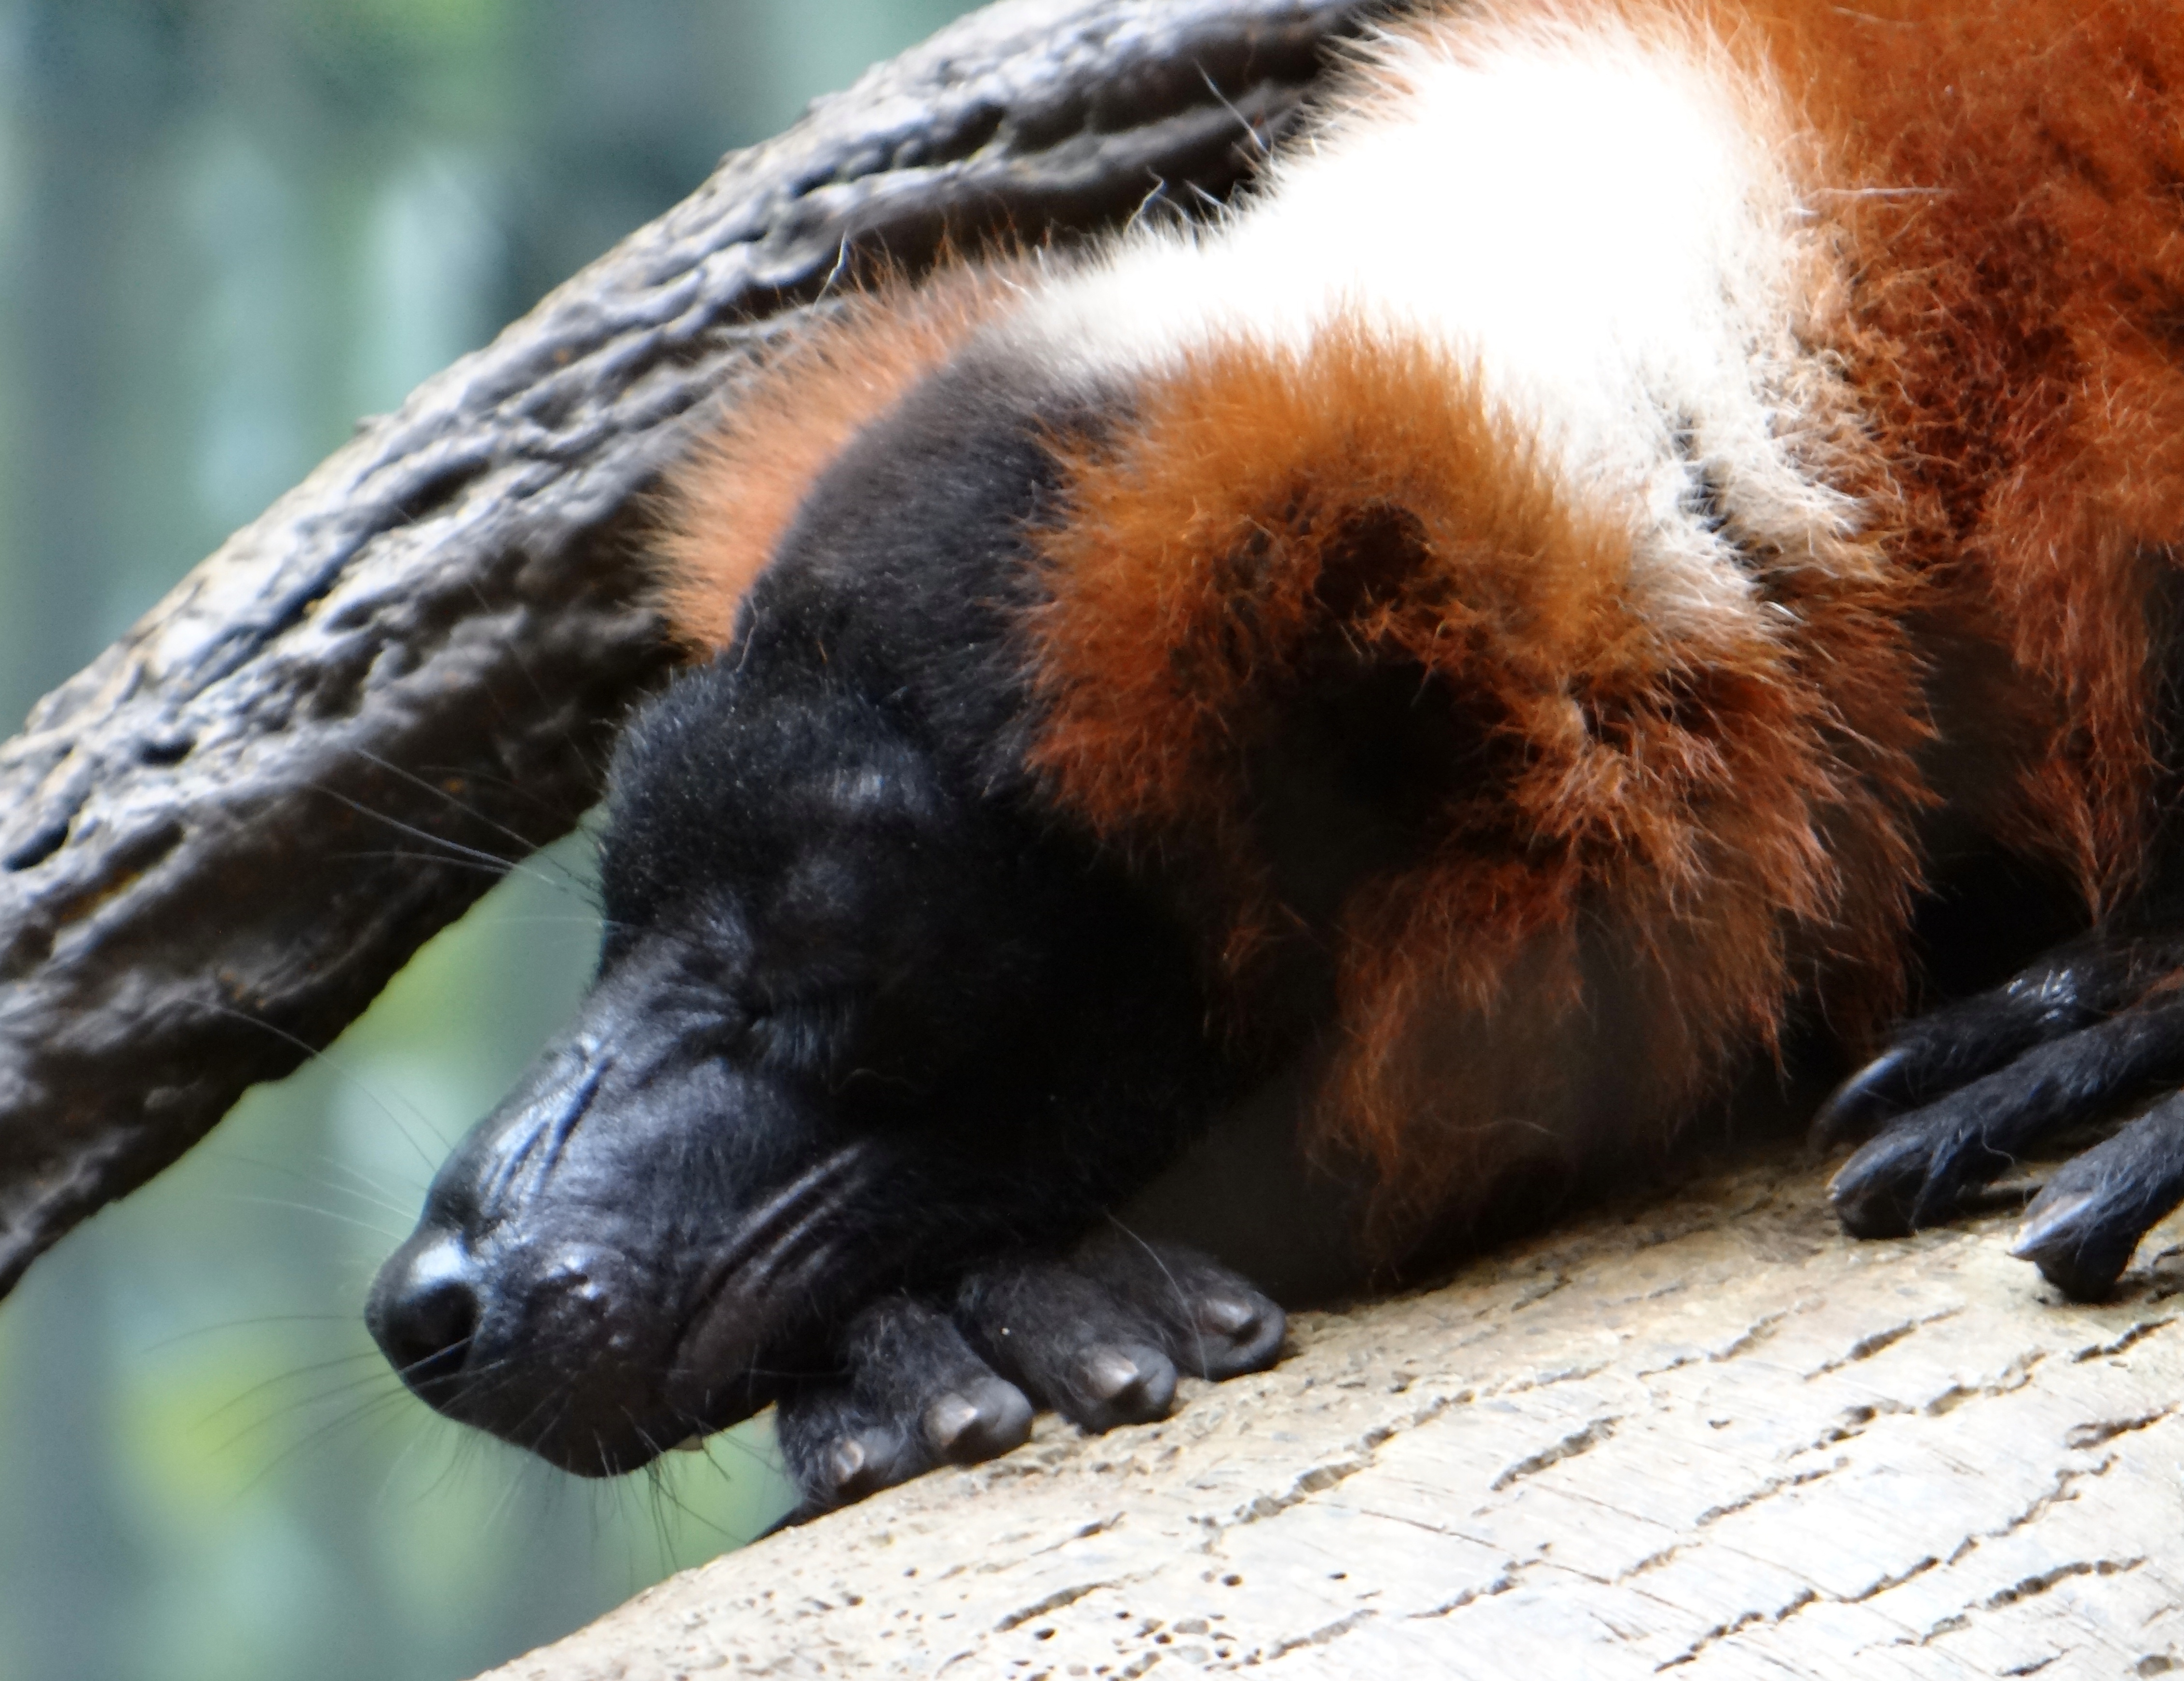 Red-ruffed lemur at Bronx Zoo